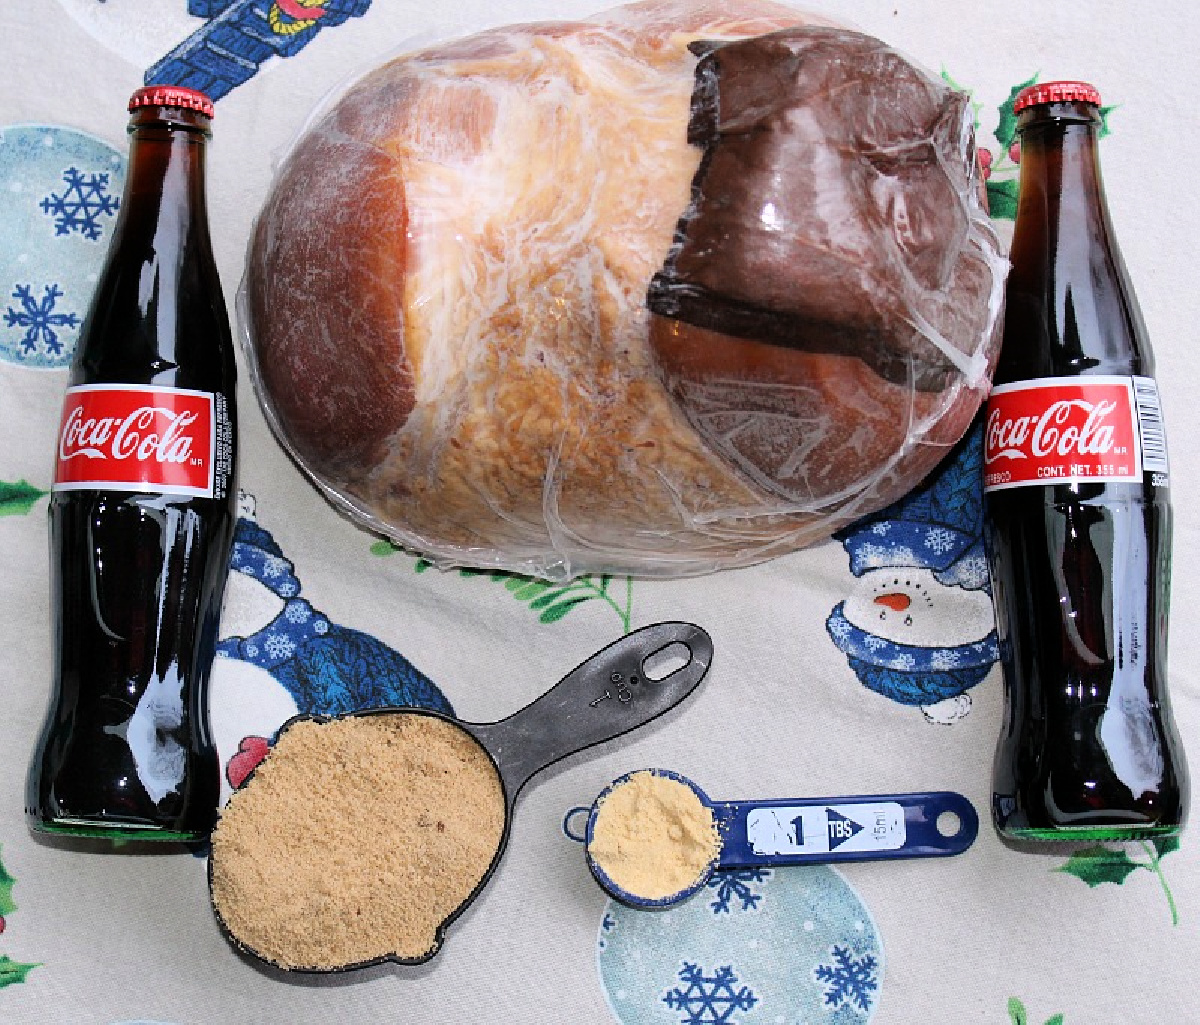 Coca Cola Crock Pot Ham Ingredients On Table